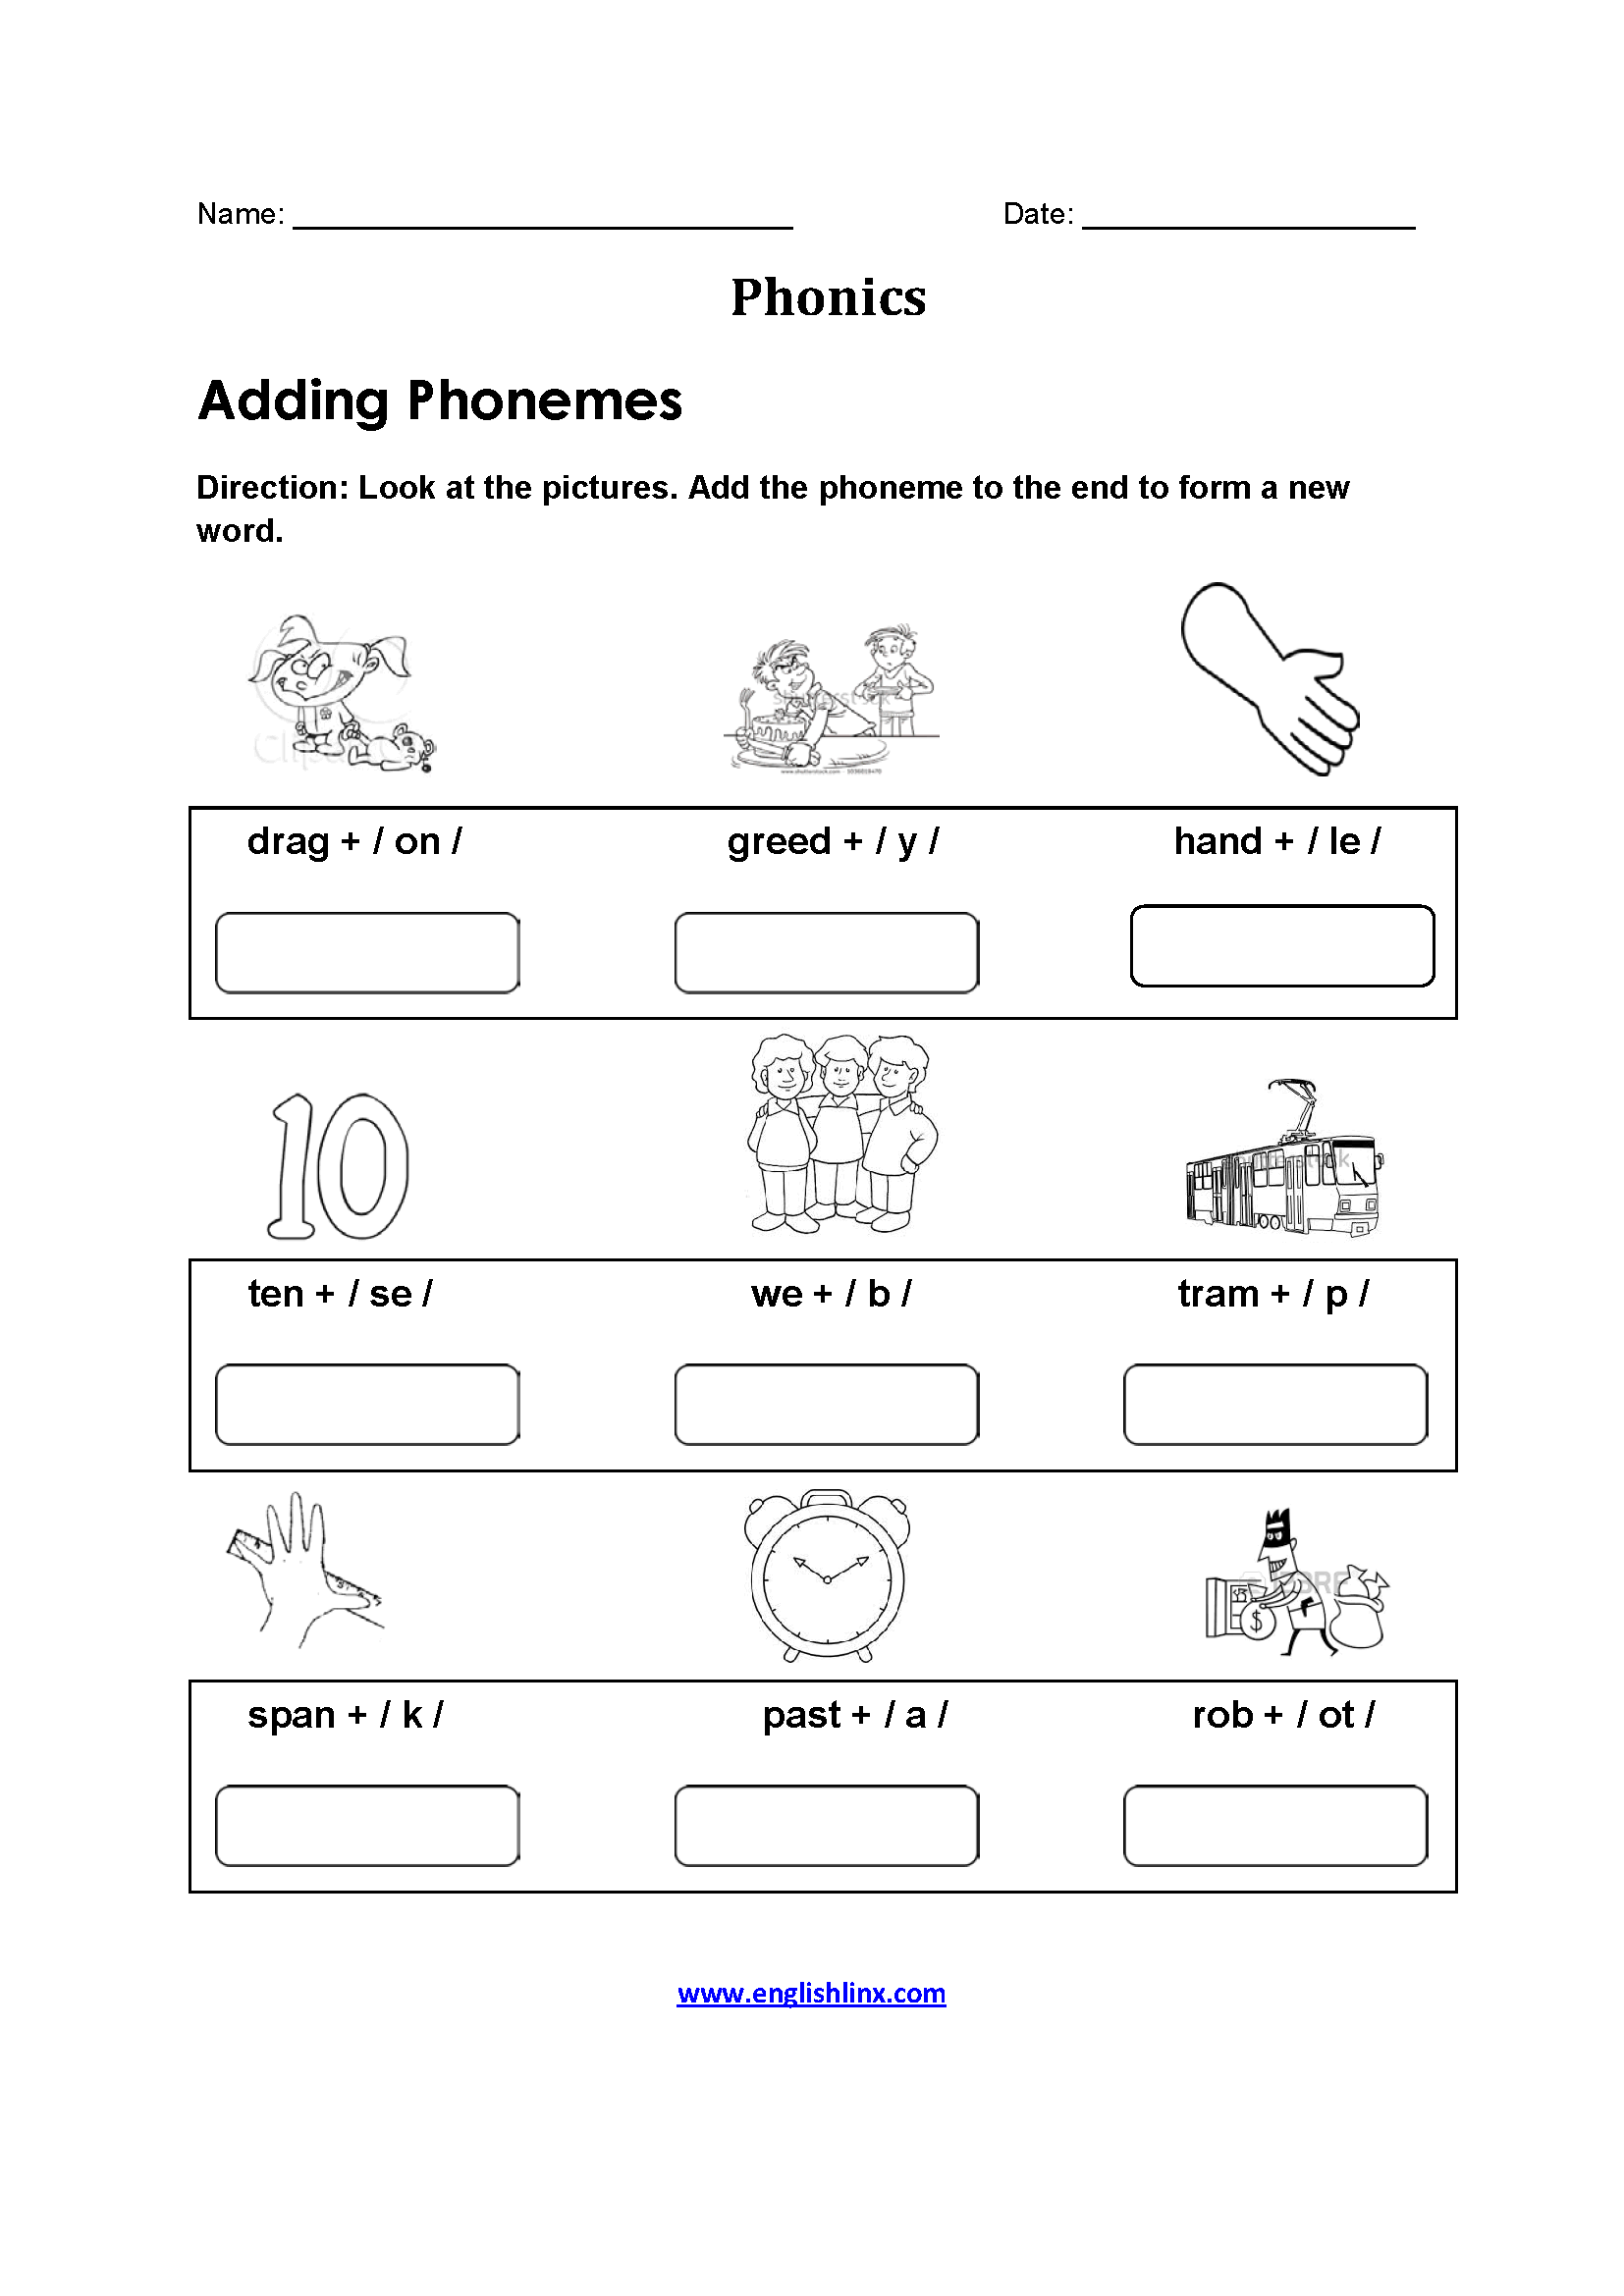 Adding Phonemes Phonics Worksheets